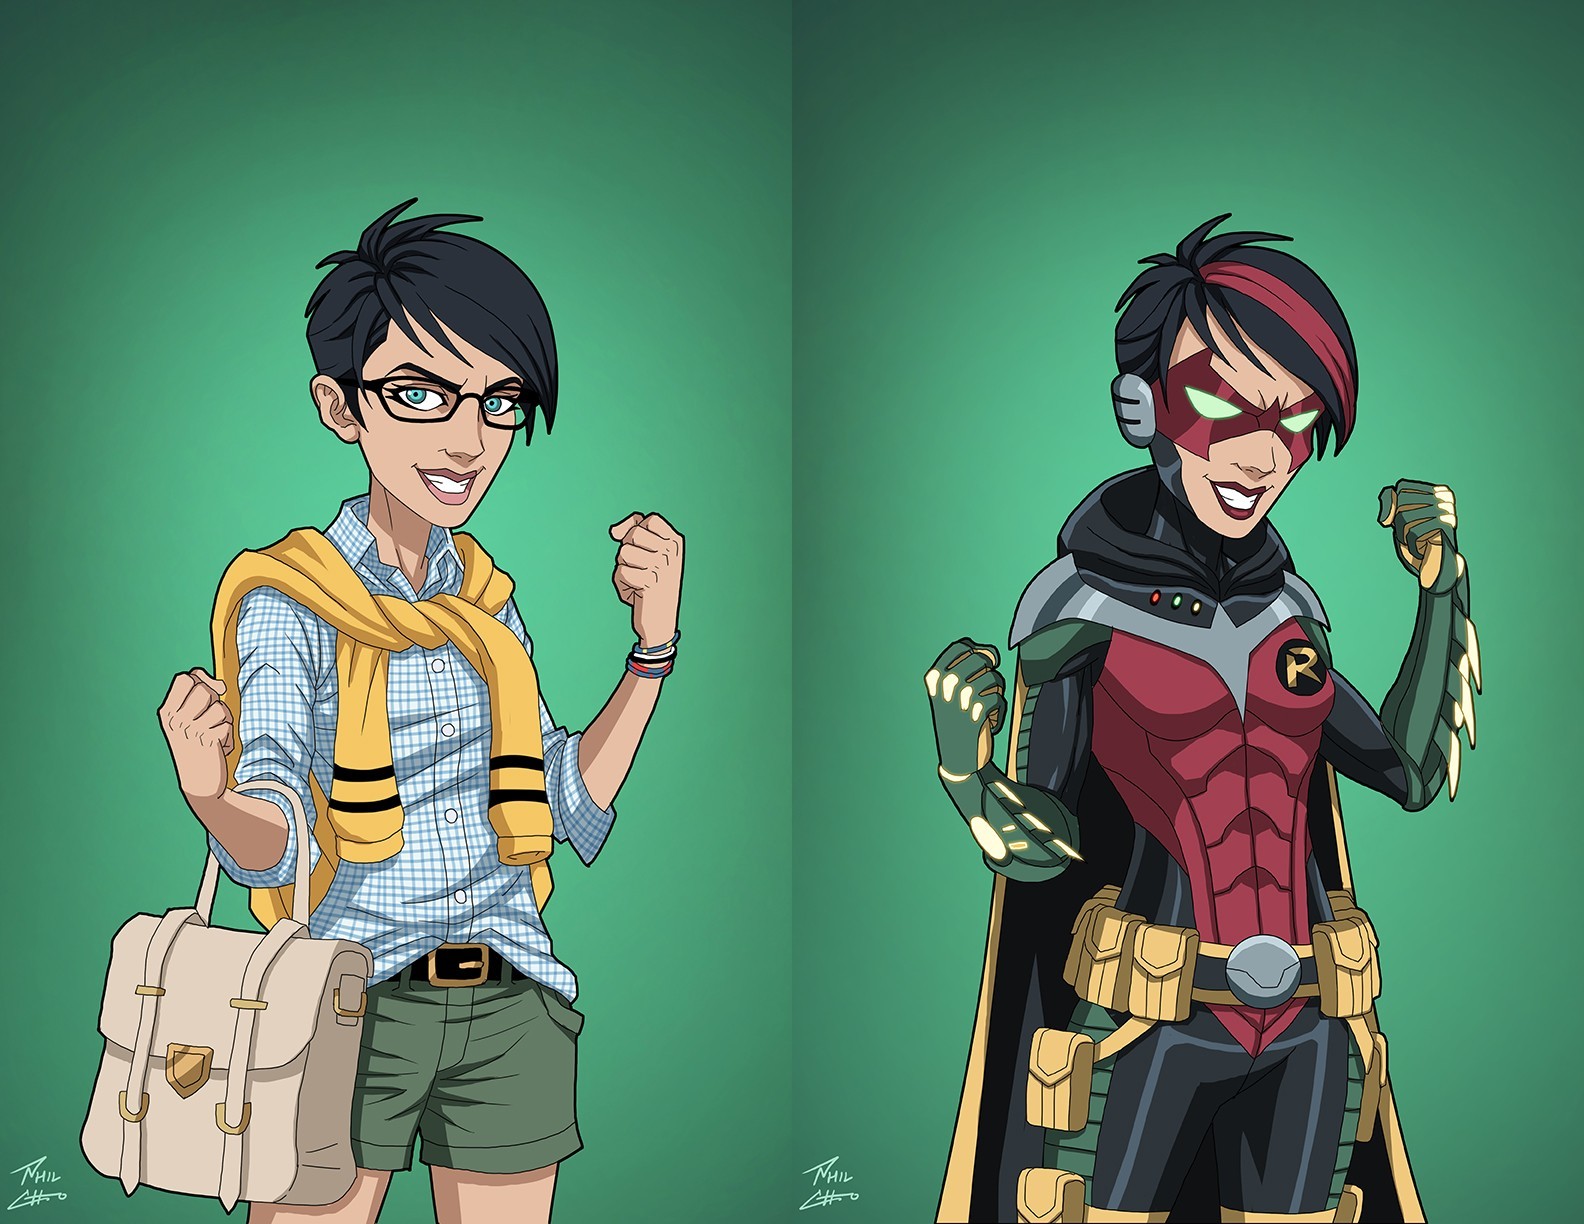 Characters from the DC Comics universe by artist Phil Cho. - DC, Dc comics, Art, Superheroes, Comics, Green light, Arrow, Robin, Longpost